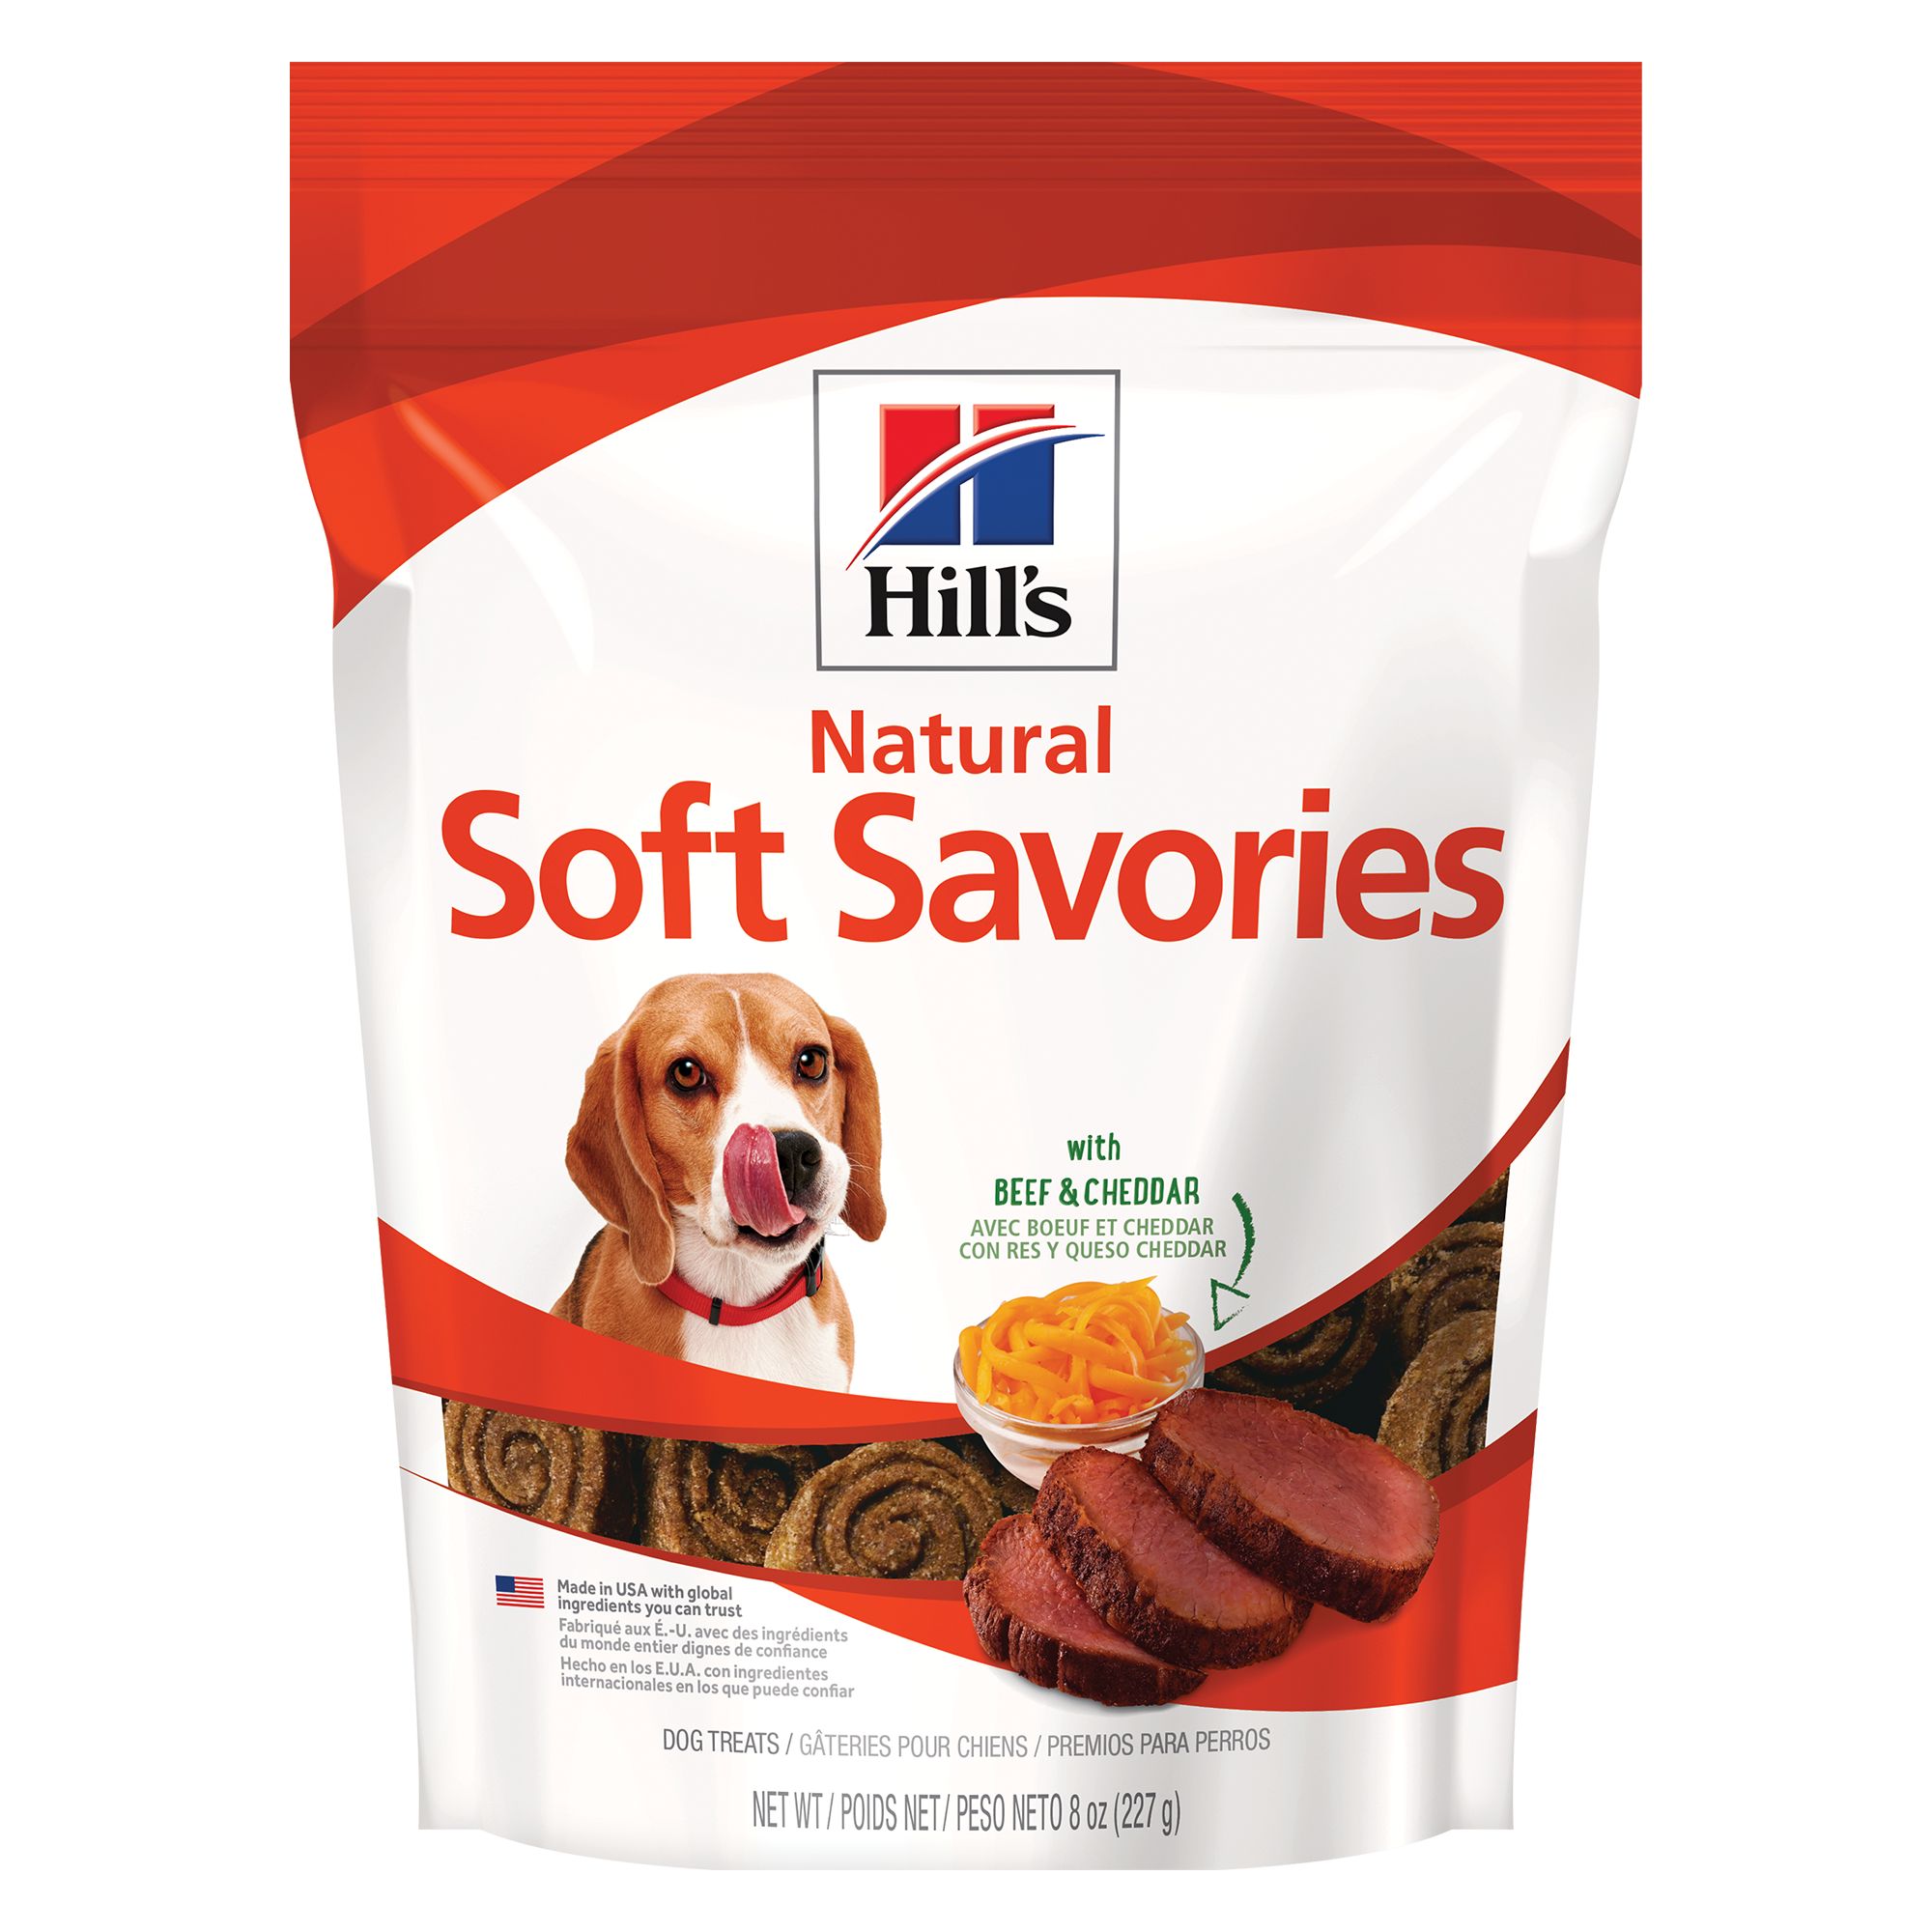 science diet soft dog food